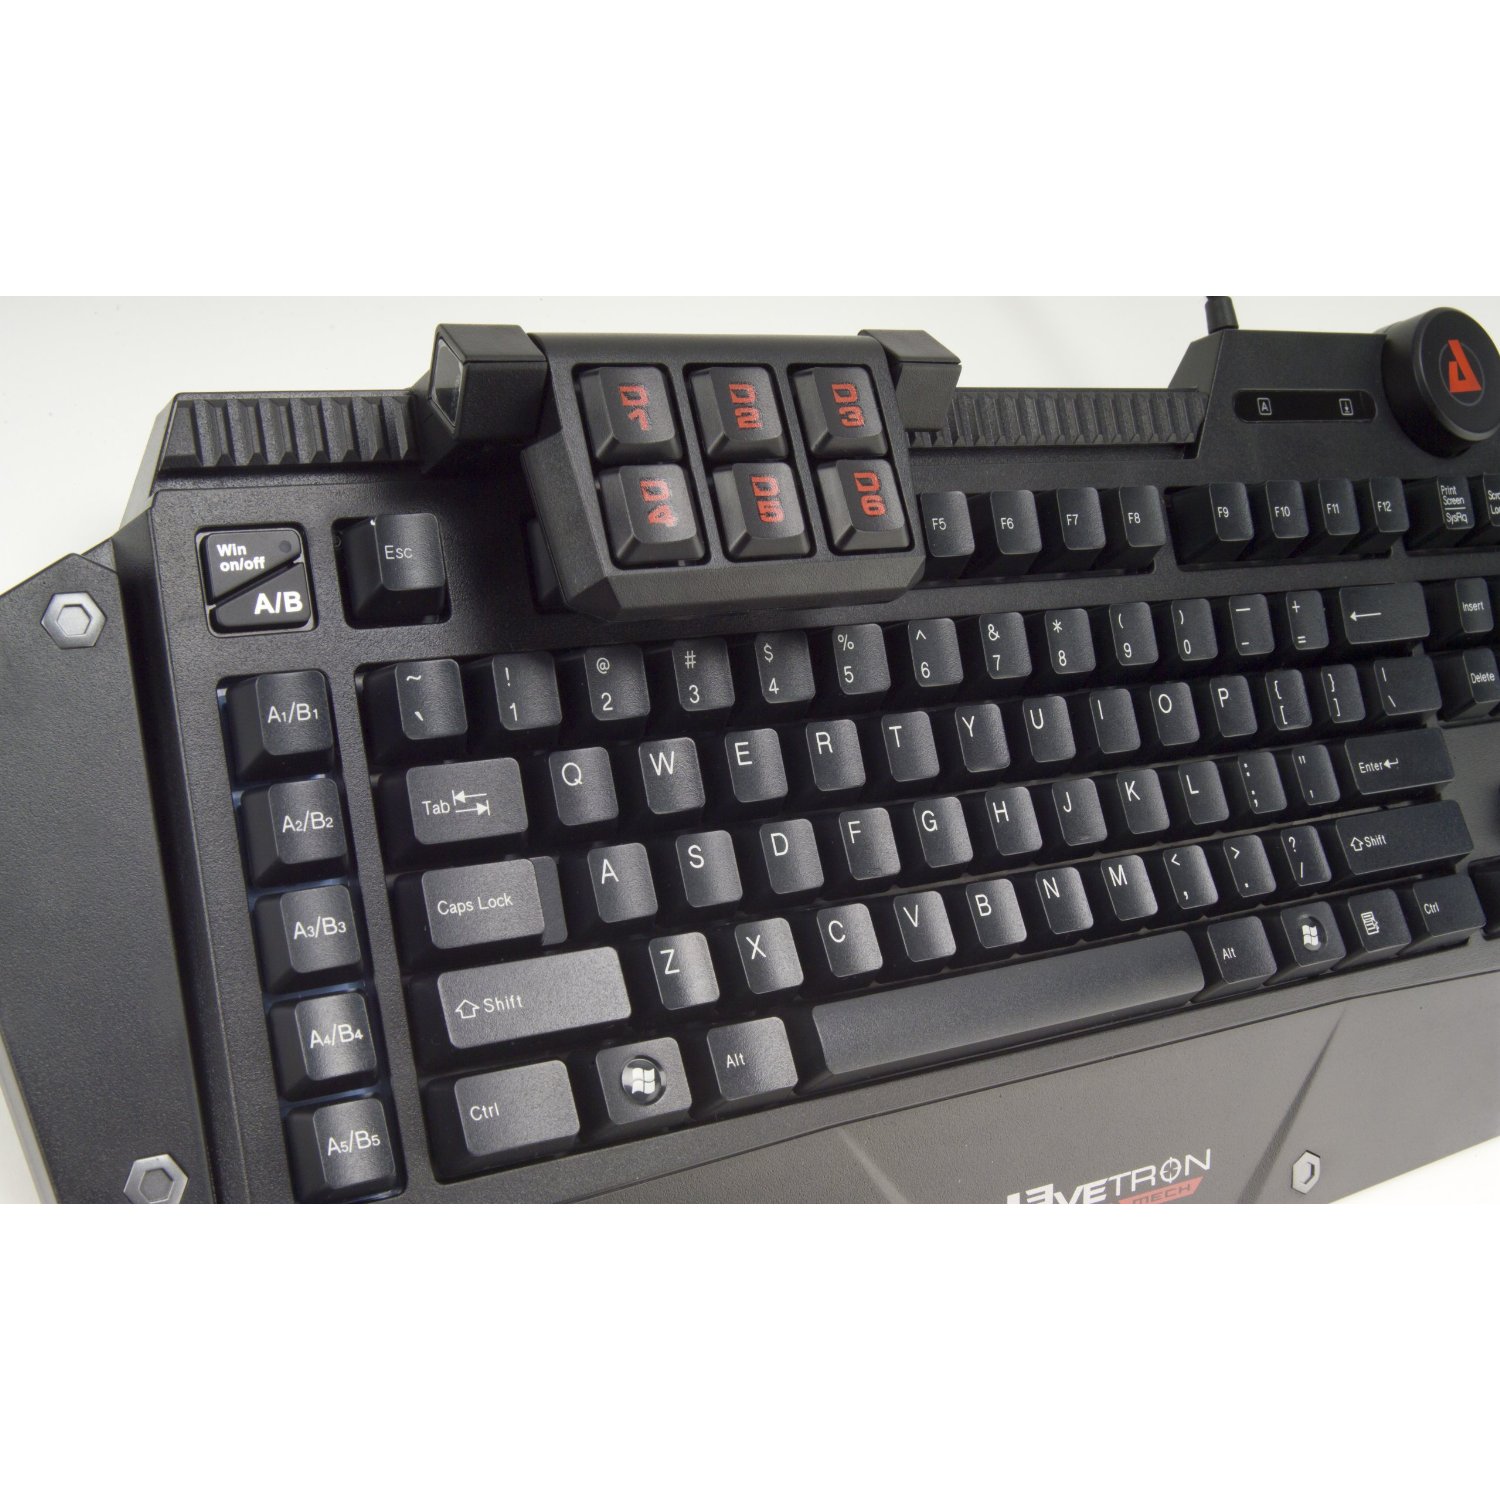 http://thetechjournal.com/wp-content/uploads/images/1208/1346151766-azio-levetron-mech5-mechanical-gaming-keyboard--7.jpg